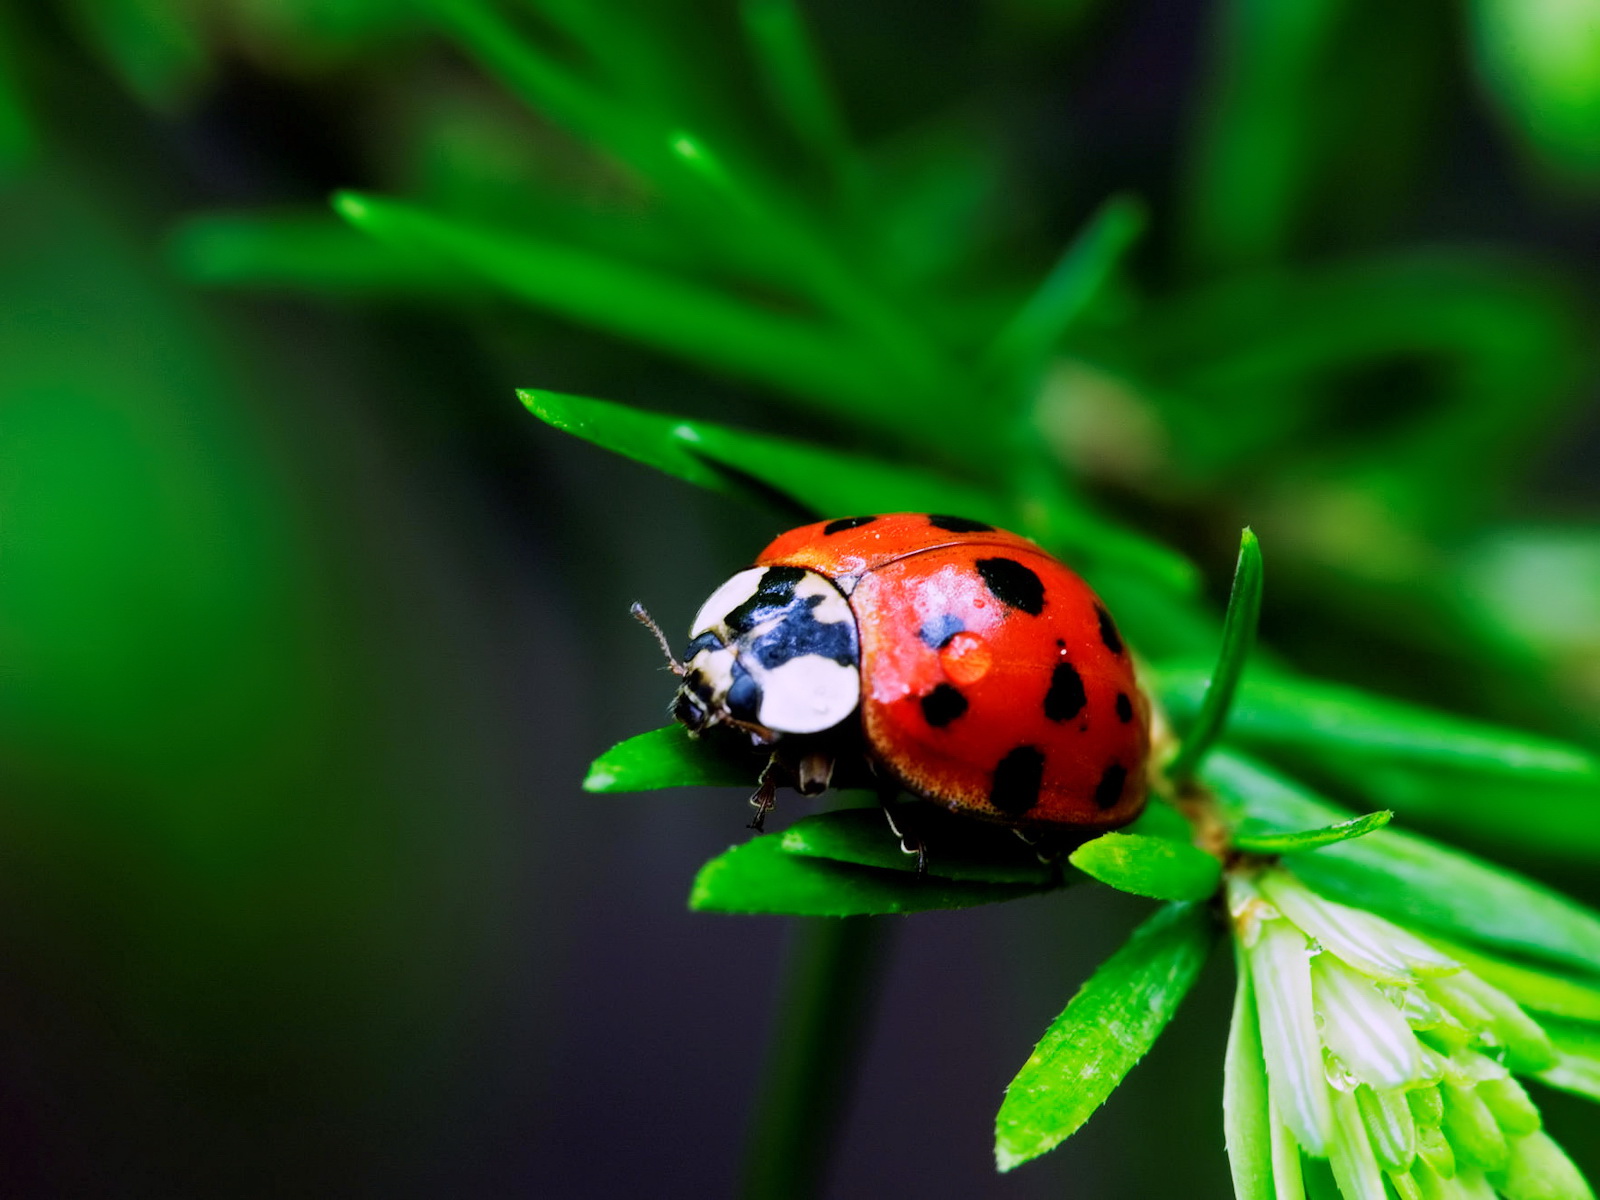 https://paul-stein.com/wp-content/uploads/2014/02/Enterprise_ladybug.gooleimage.jpg